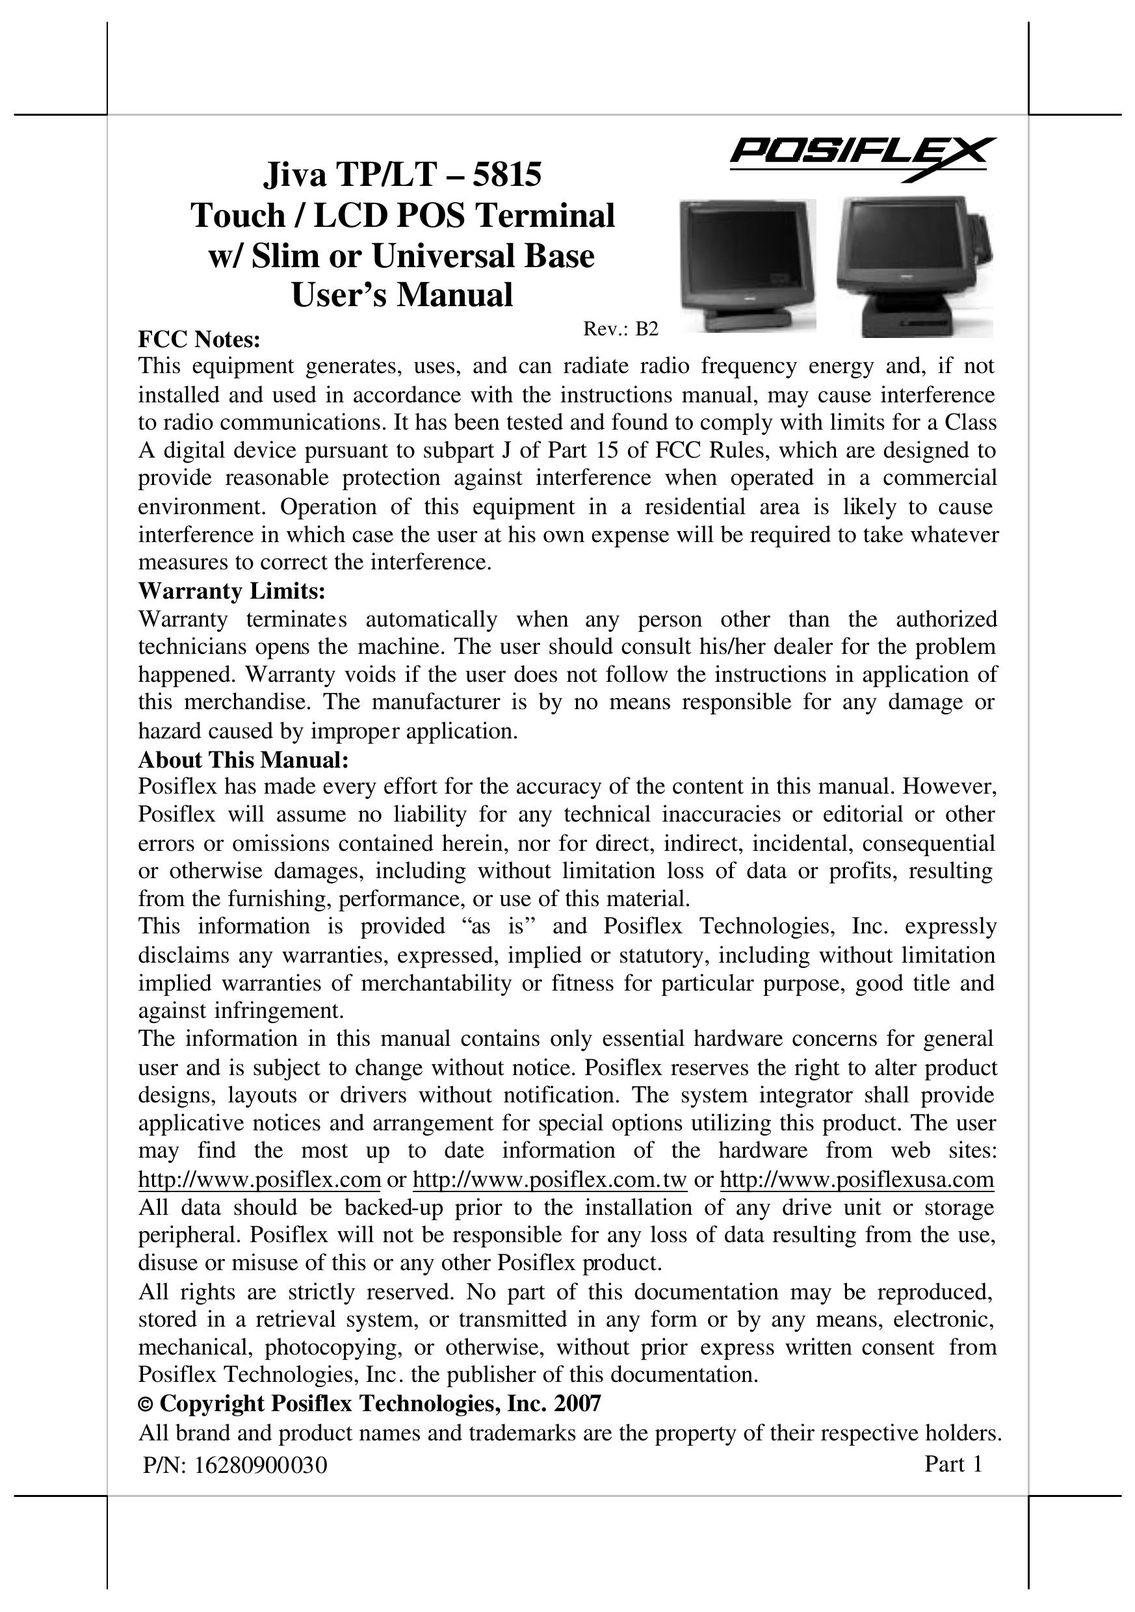 POSIFLEX Business Machines Jiva TP/LT - 5815 Computer Hardware User Manual